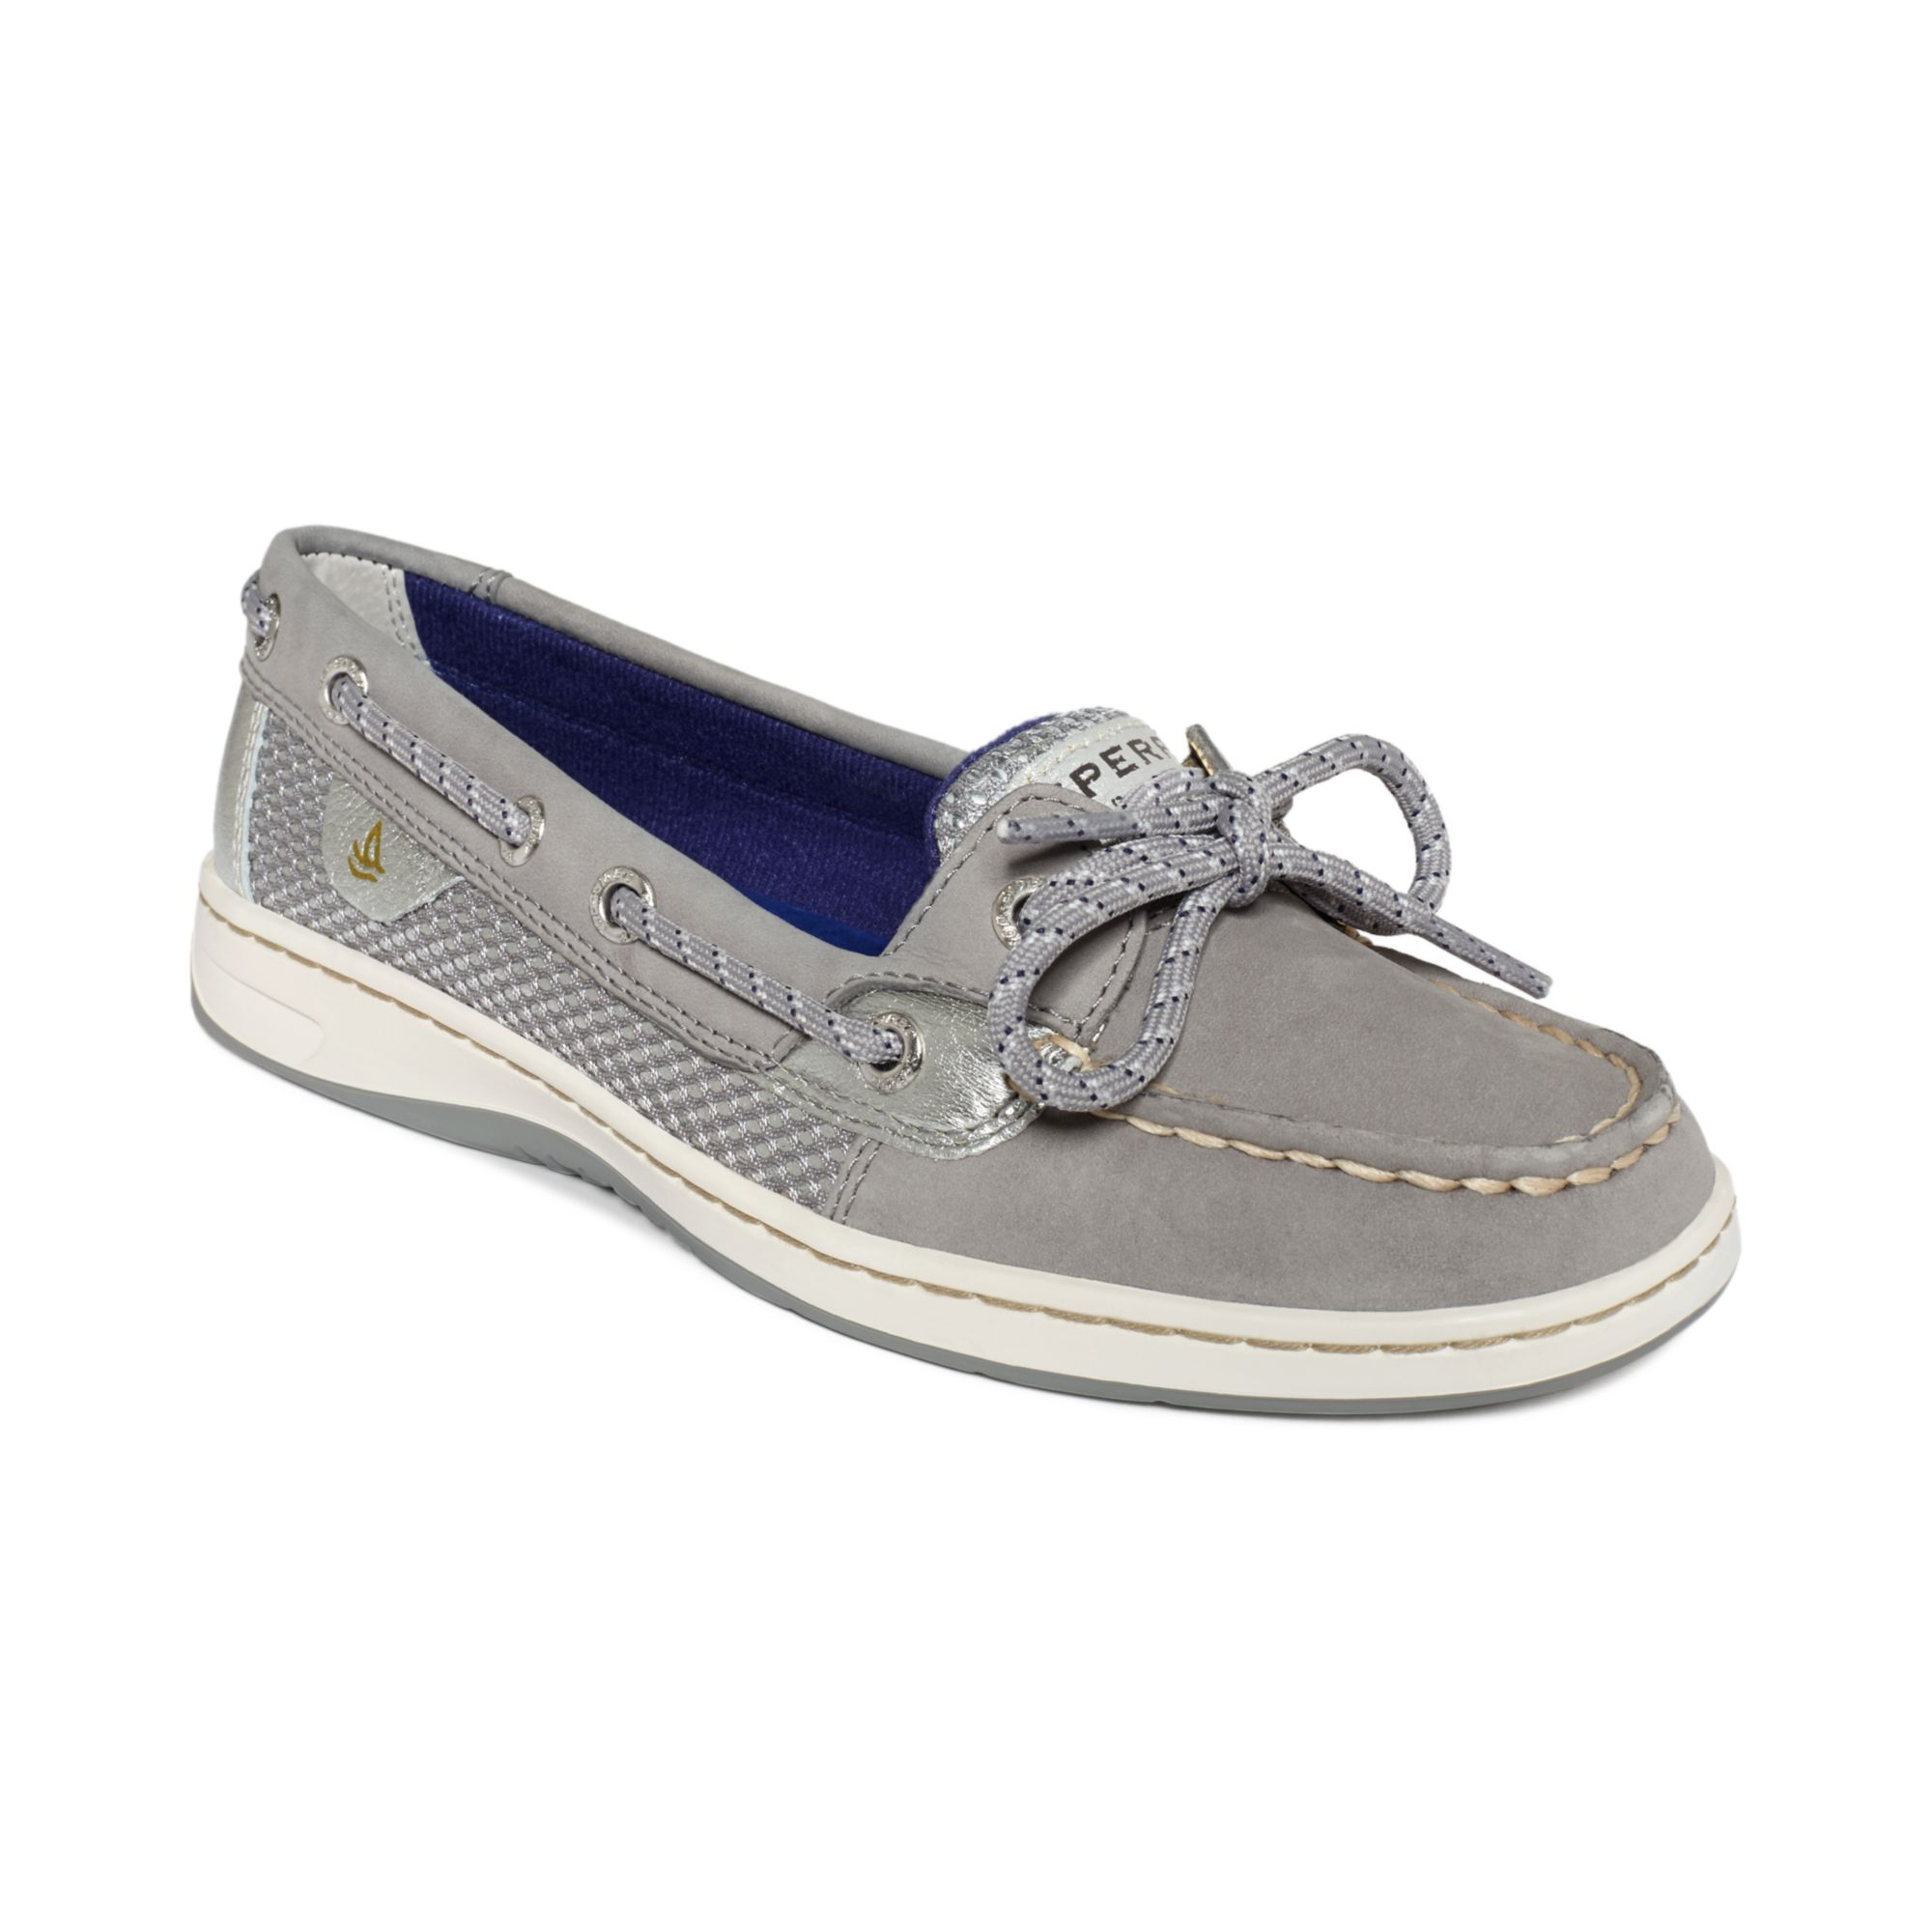 women's gray boat shoes